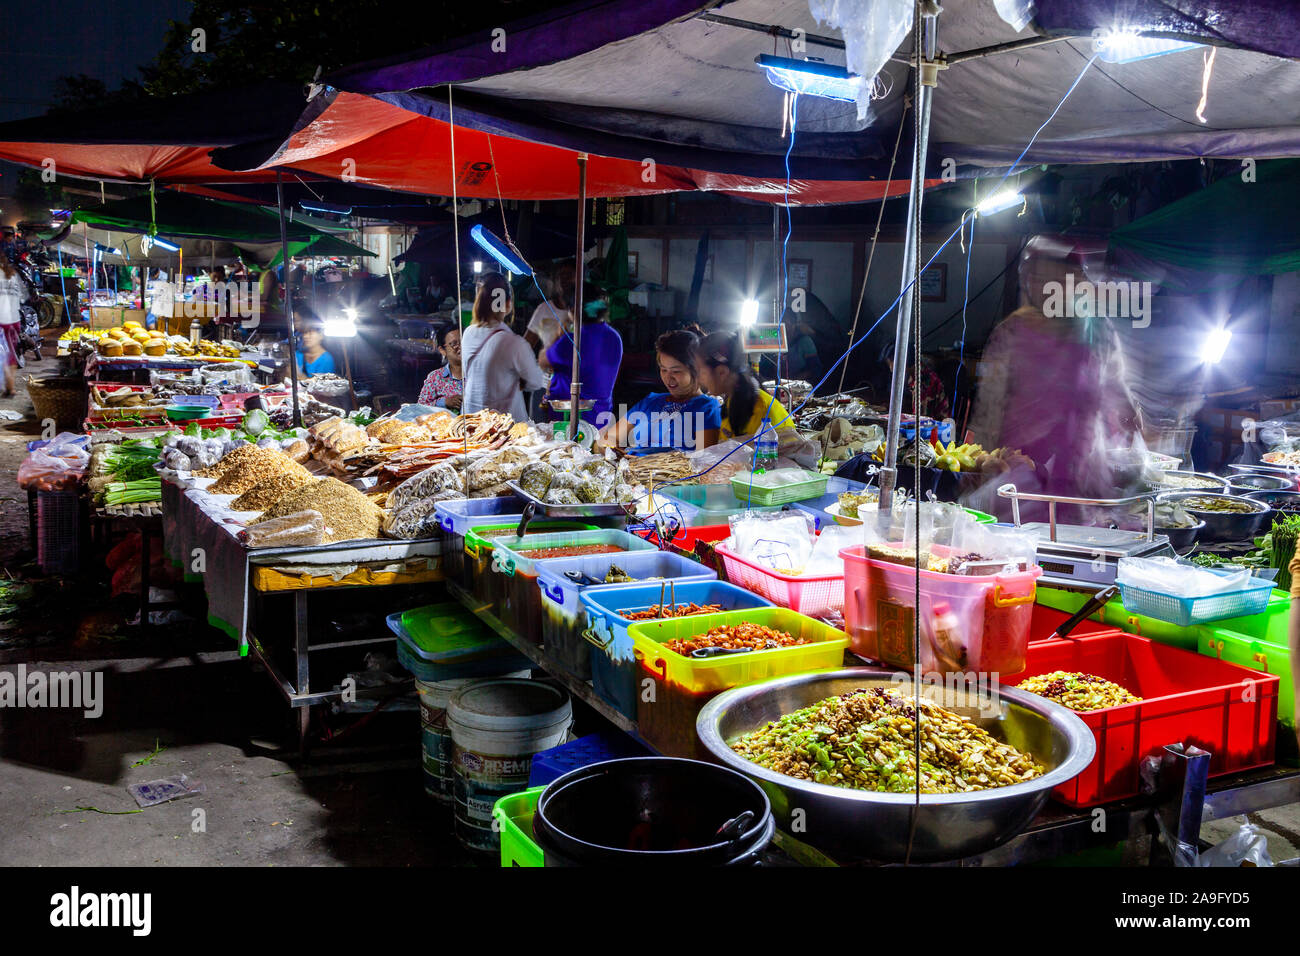 A Food Stall At The Night Market, Mandalay, Myanmar. Stock Photo